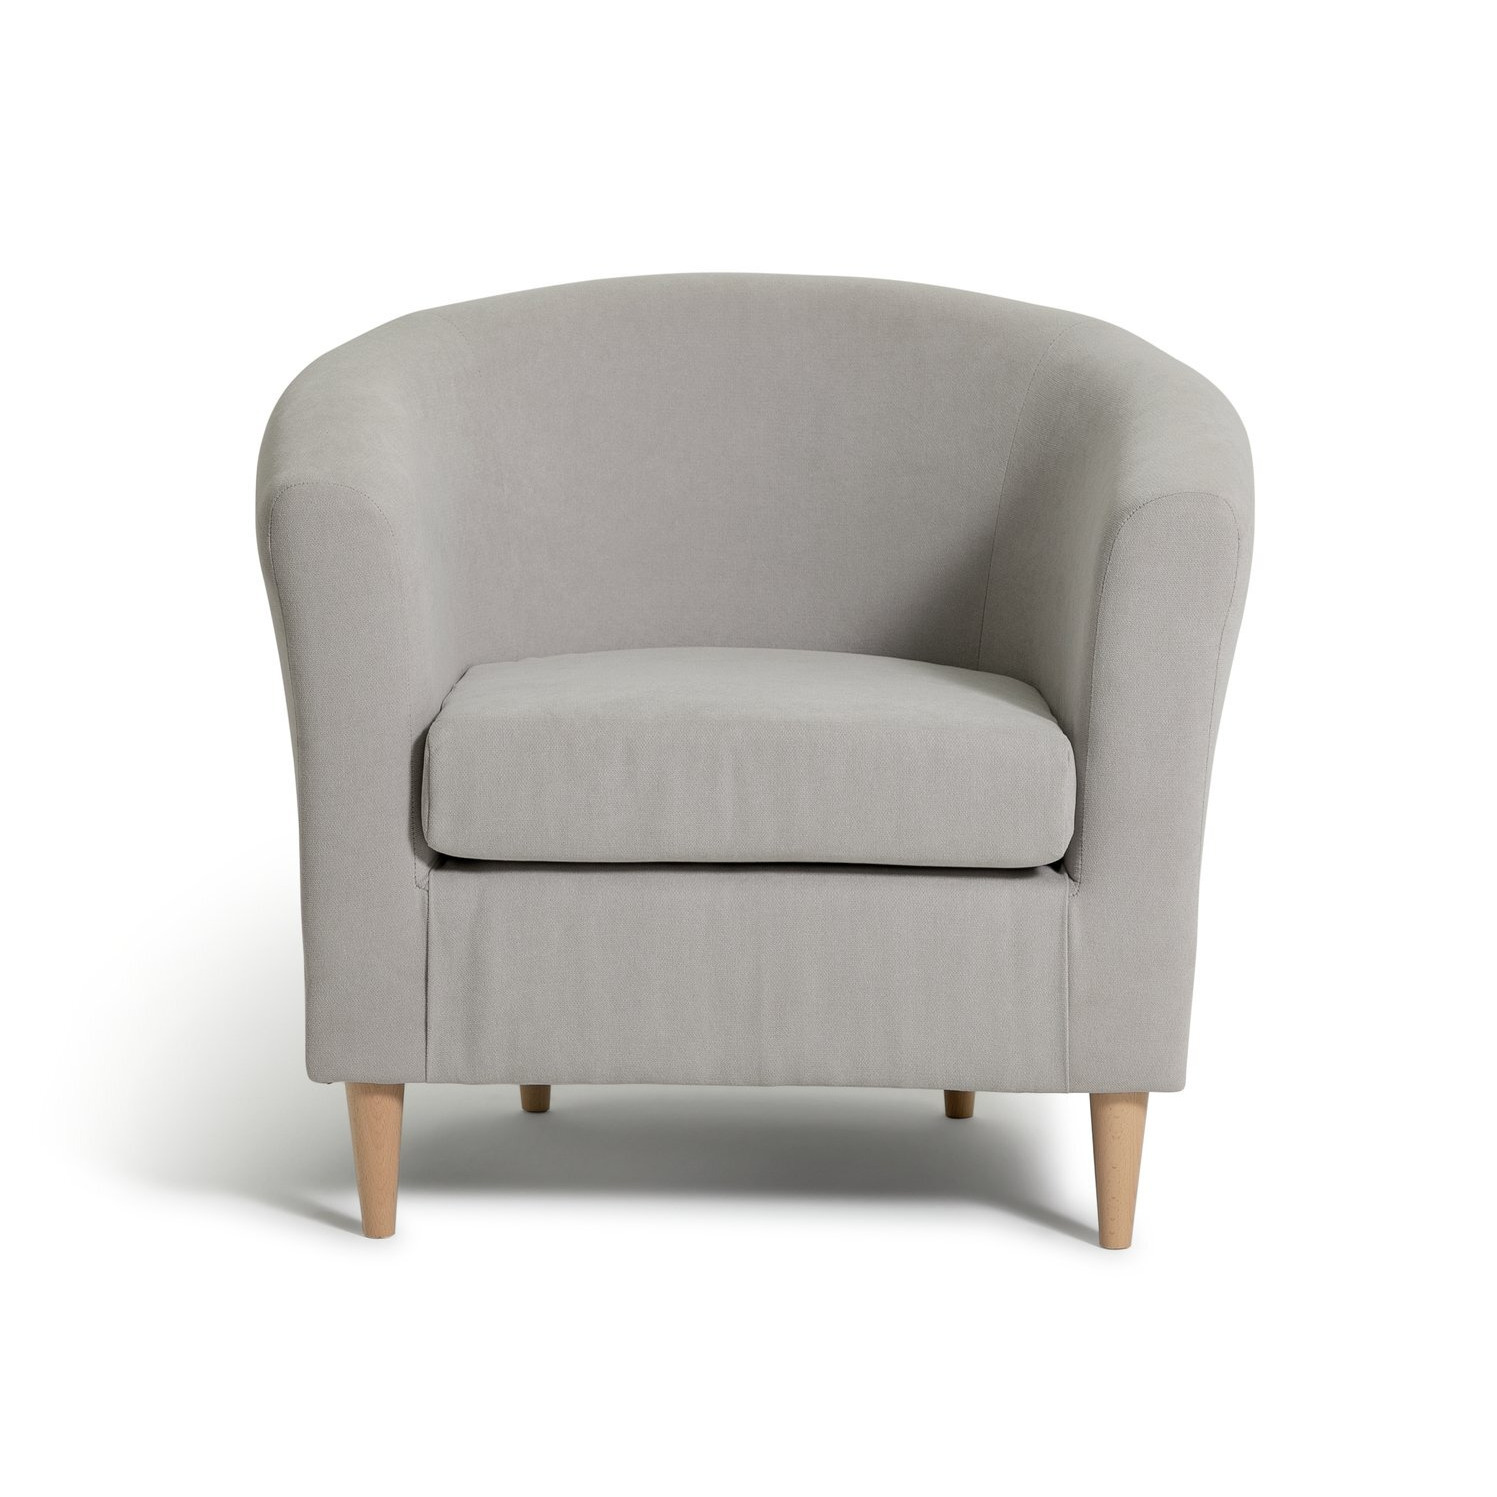 Habitat Fabric Tub Chair - Grey - image 1